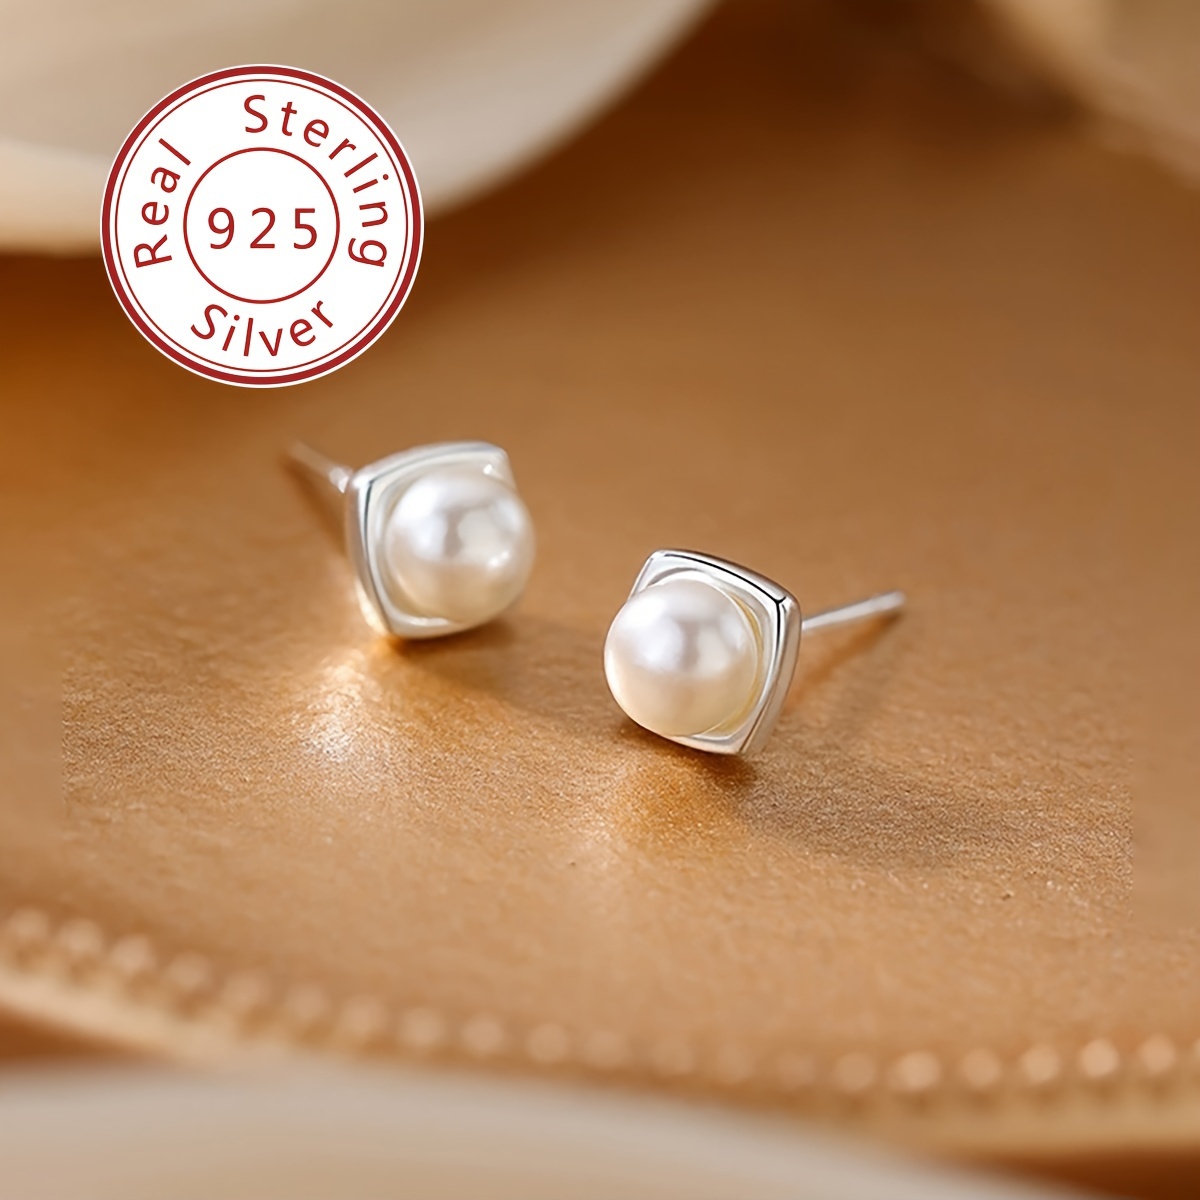 

S925 Sterling Silver Freshwater Pearl Stud Earrings Classic Luxury Exquisite Stud Earrings Ear Jewelry Accessories For Women 1g/0.04oz